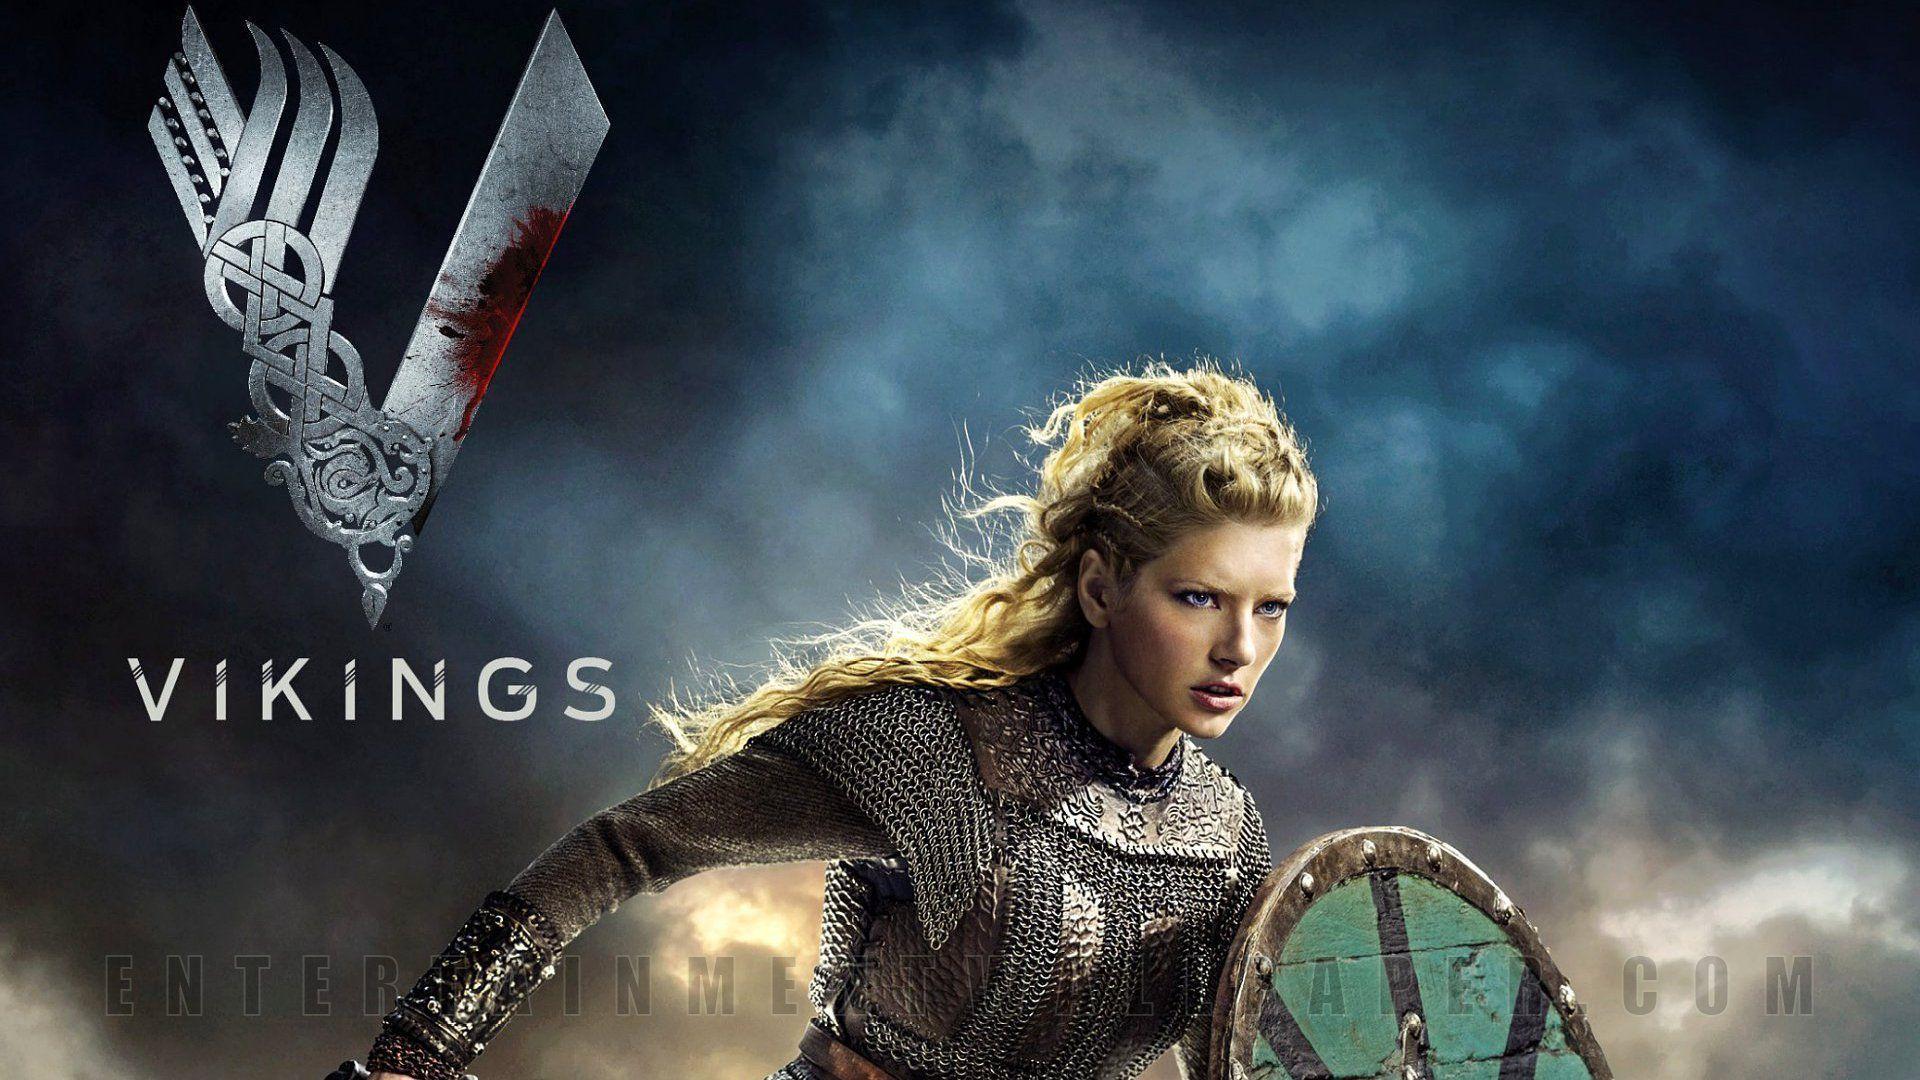 Vikings Tv Show Wallpaper 40038 in Movies